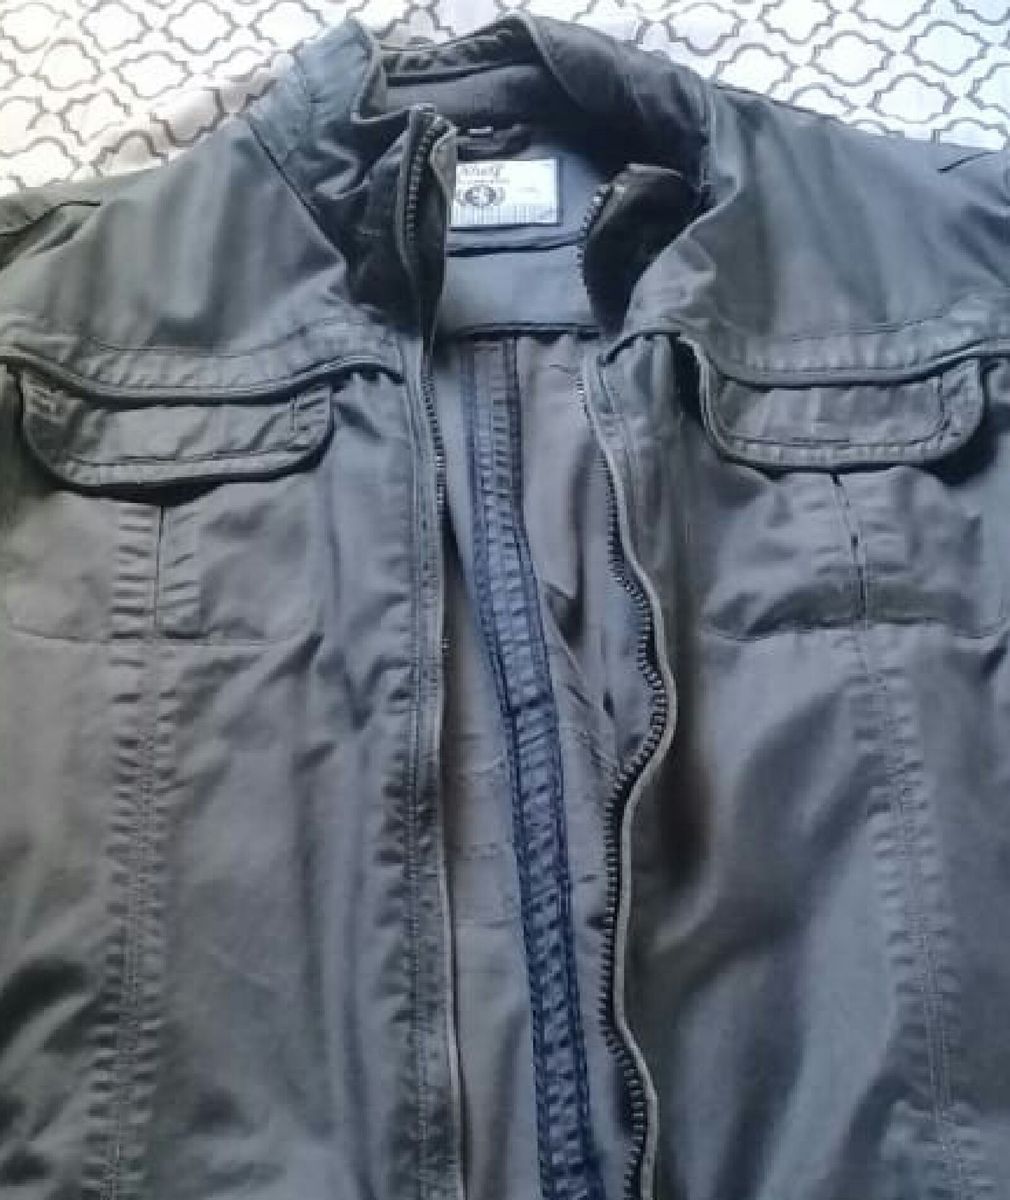 jaqueta masculina khelf